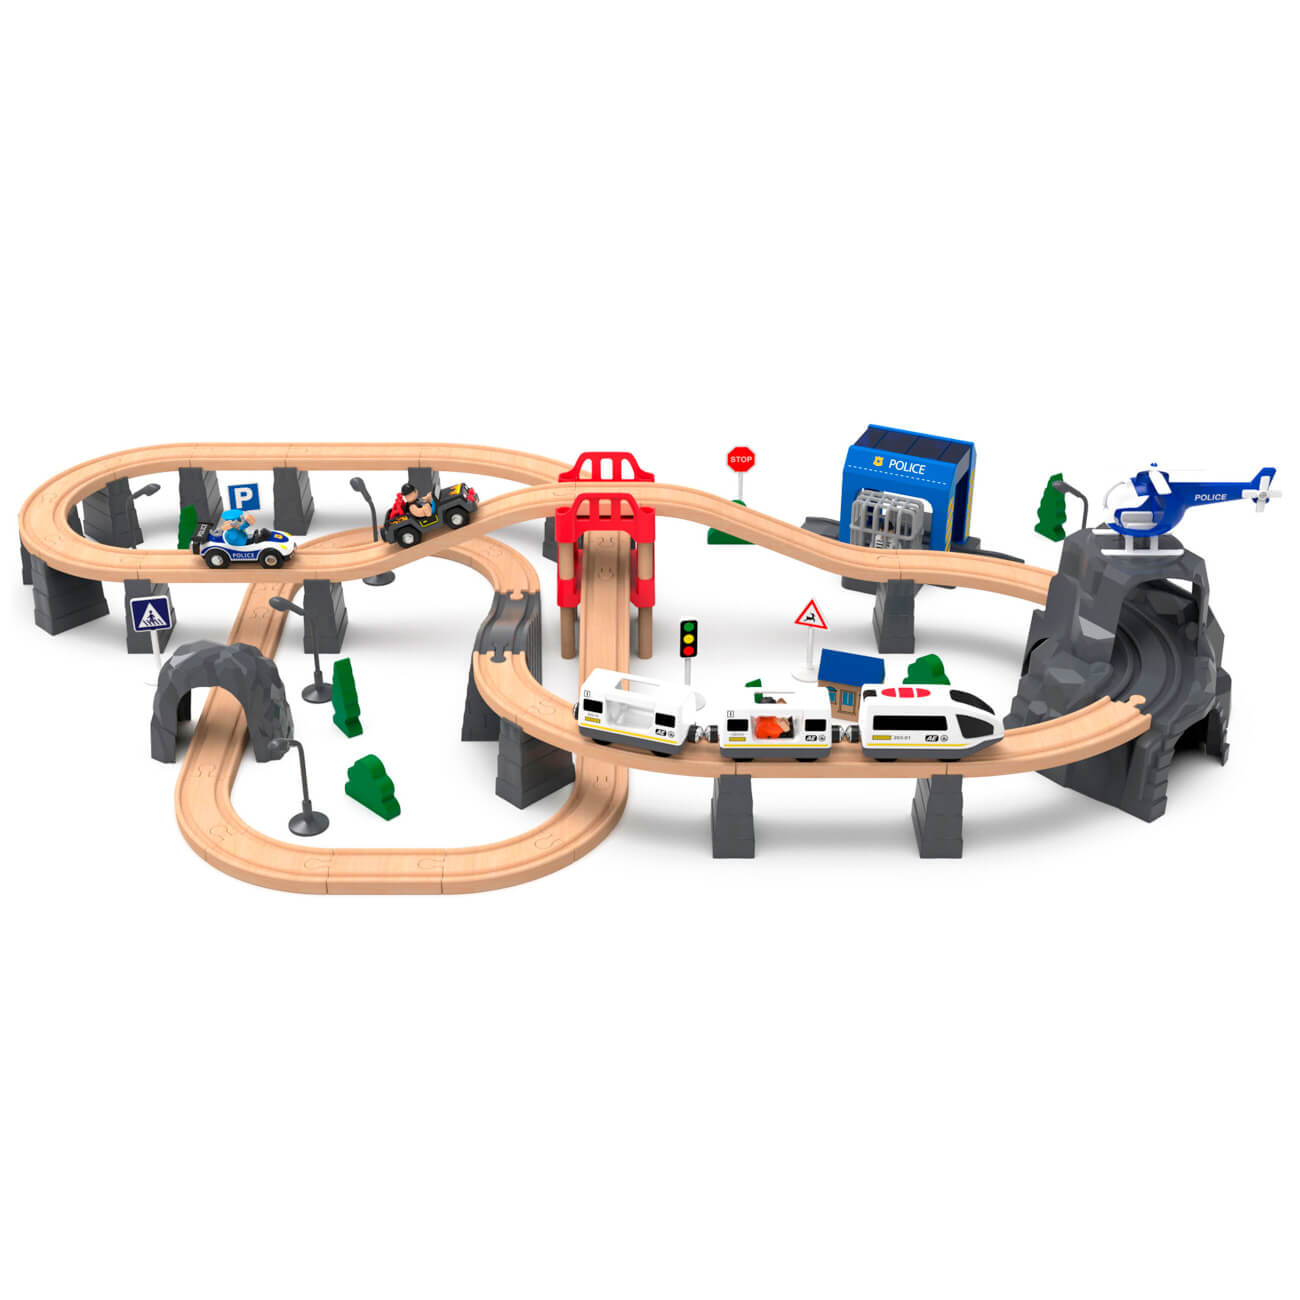 Железная дорога игрушечная, 98 см, дерево/пластик, Электропоезд, Game rail железная дорога городской электропоезд